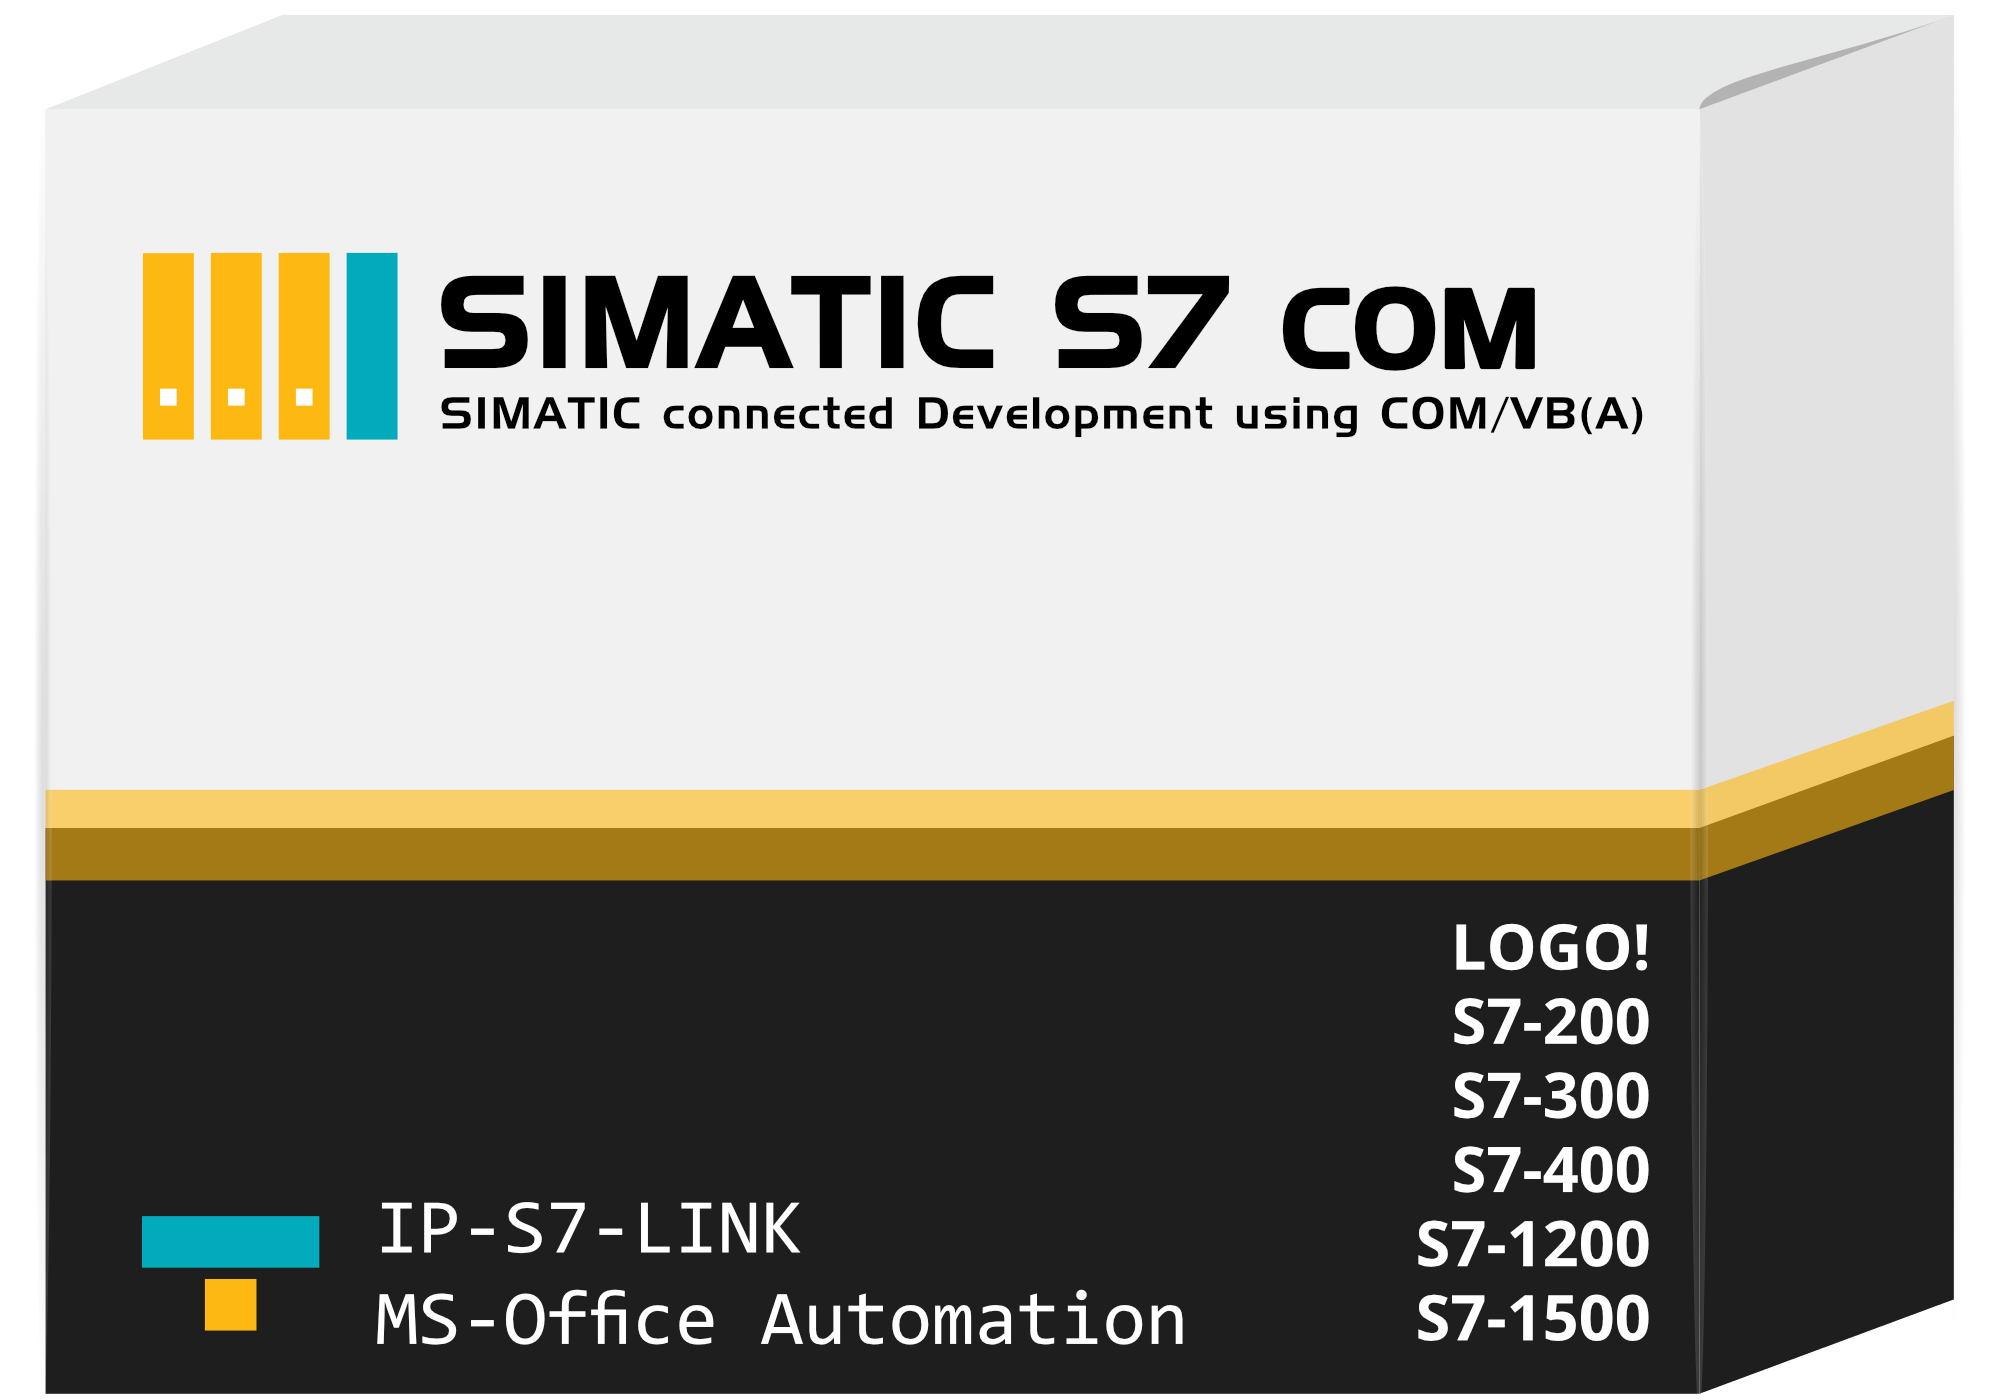 SIMATIC S7 COM SDK product image